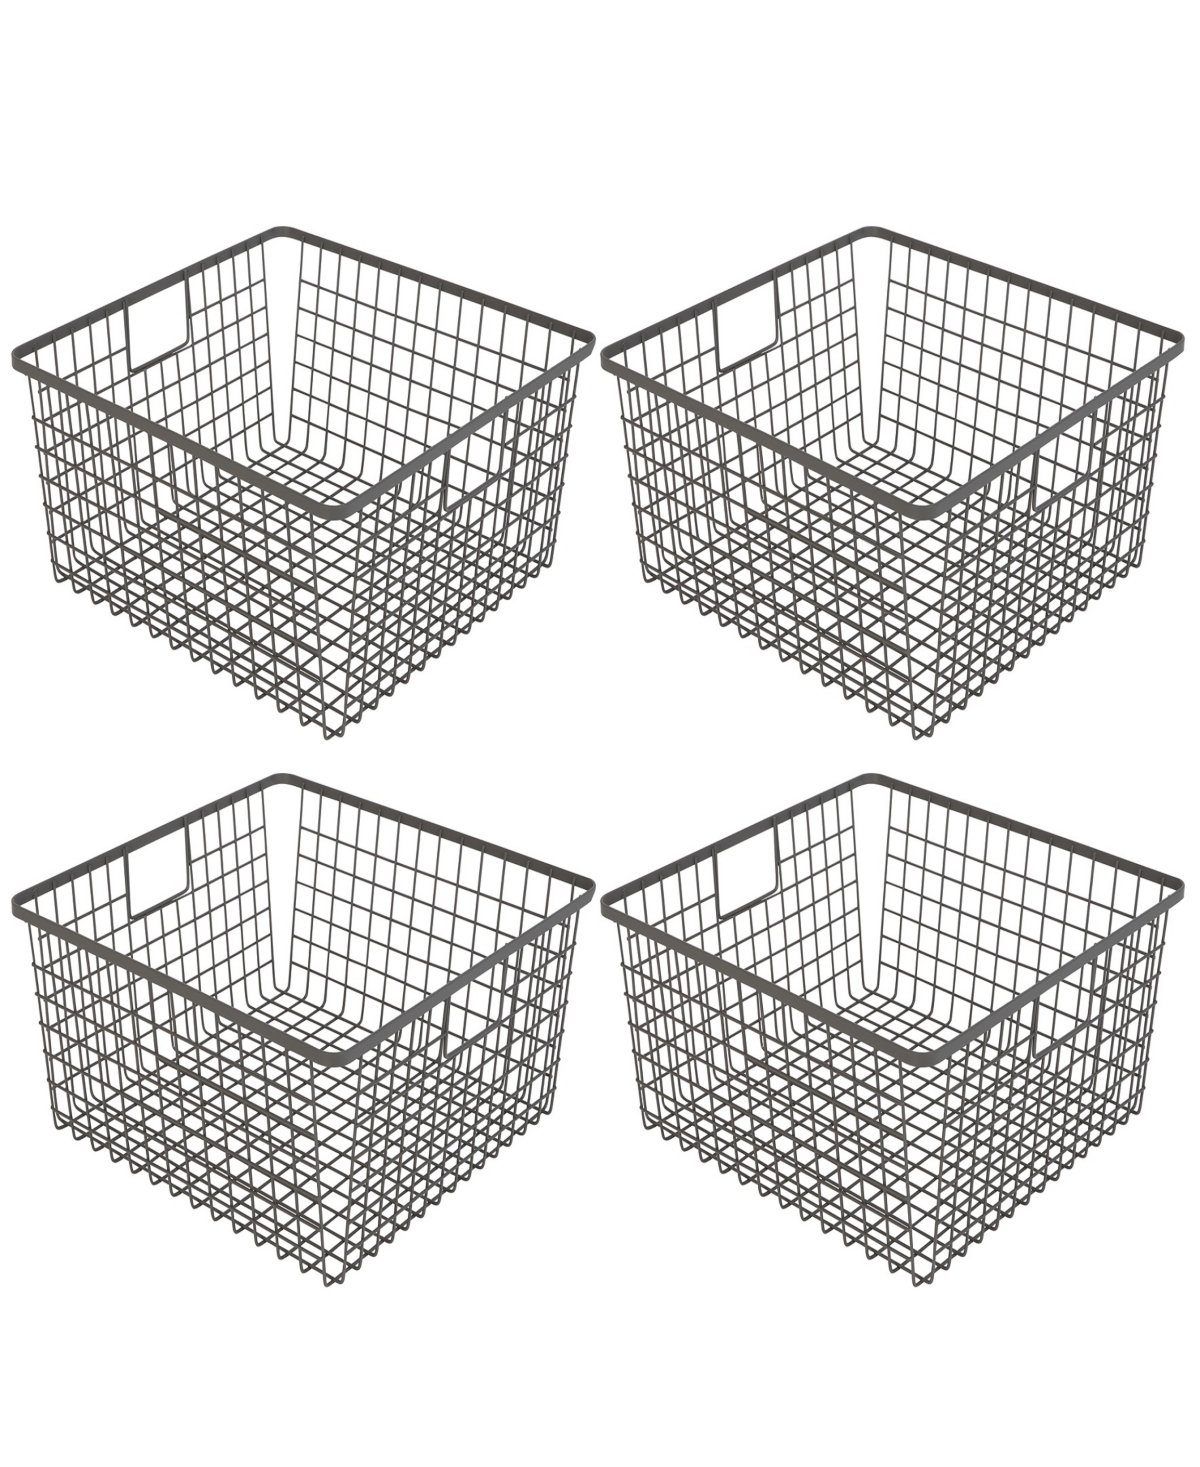 Nestable 12 x 12 x 6 inch Basket Organizer with Handles - Set of 4 - Gunmetal